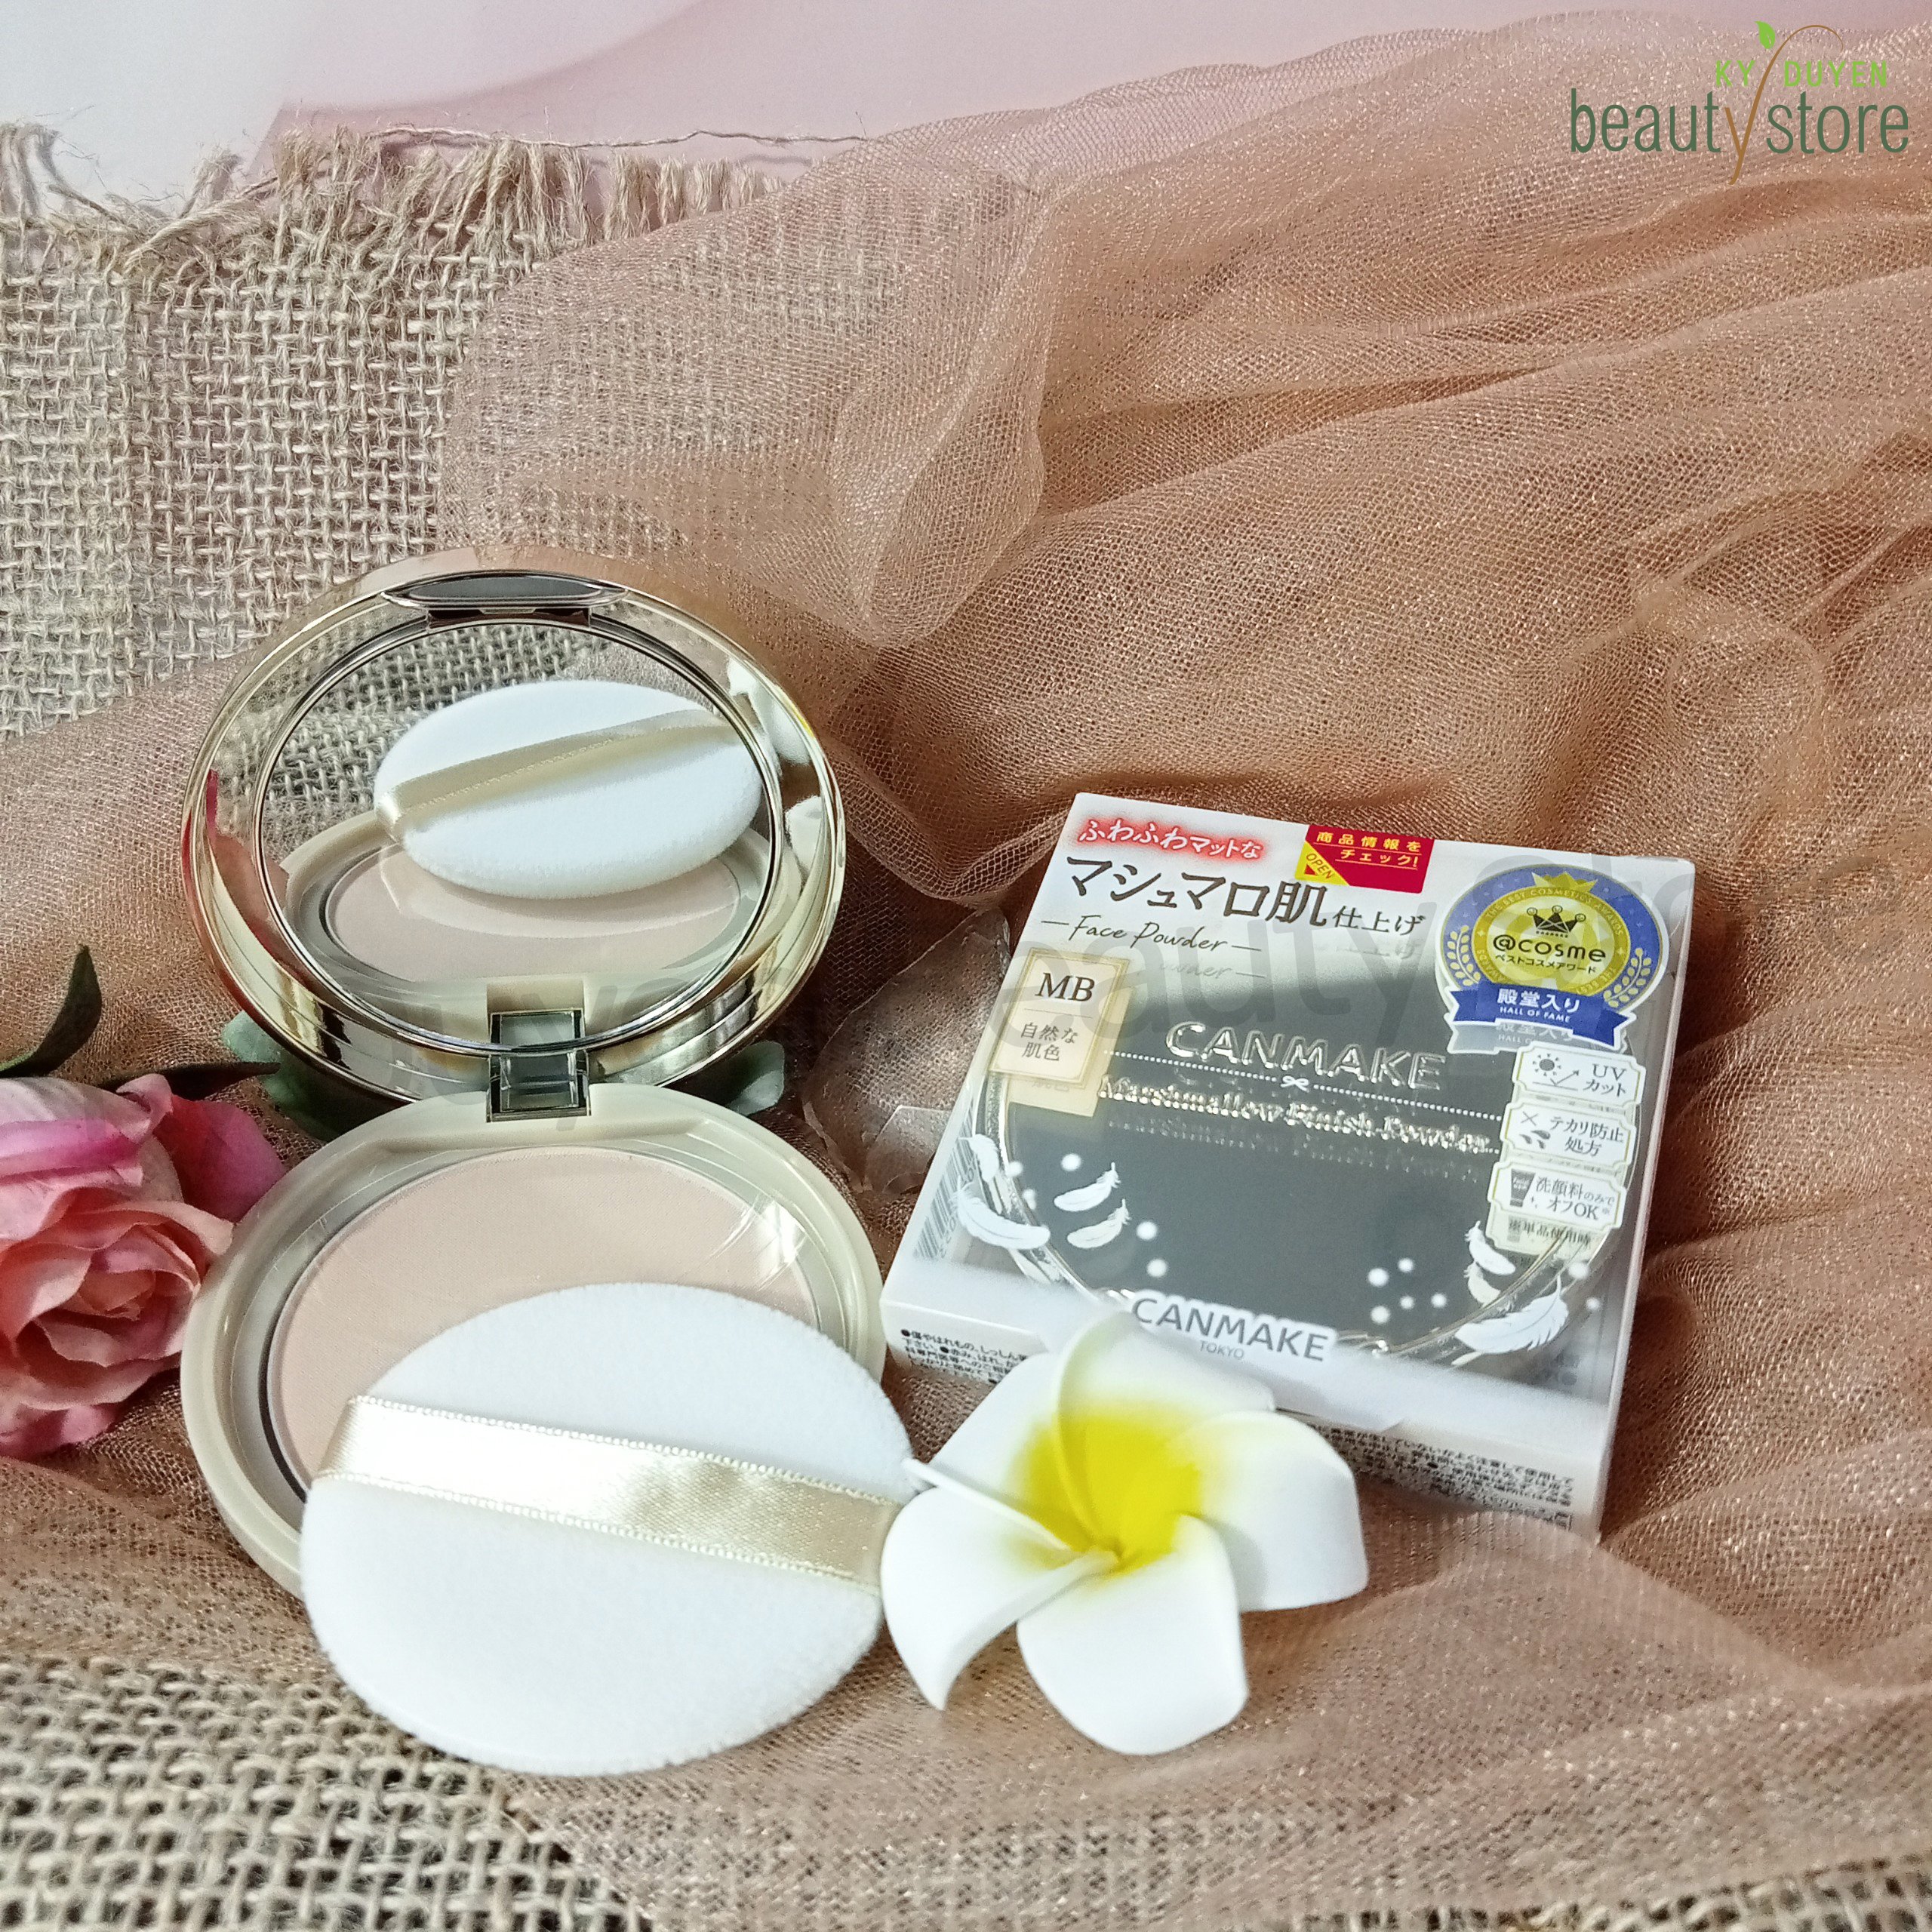 Phấn Phủ Siêu Mịn – Canmake Marshmallow Finish Powder